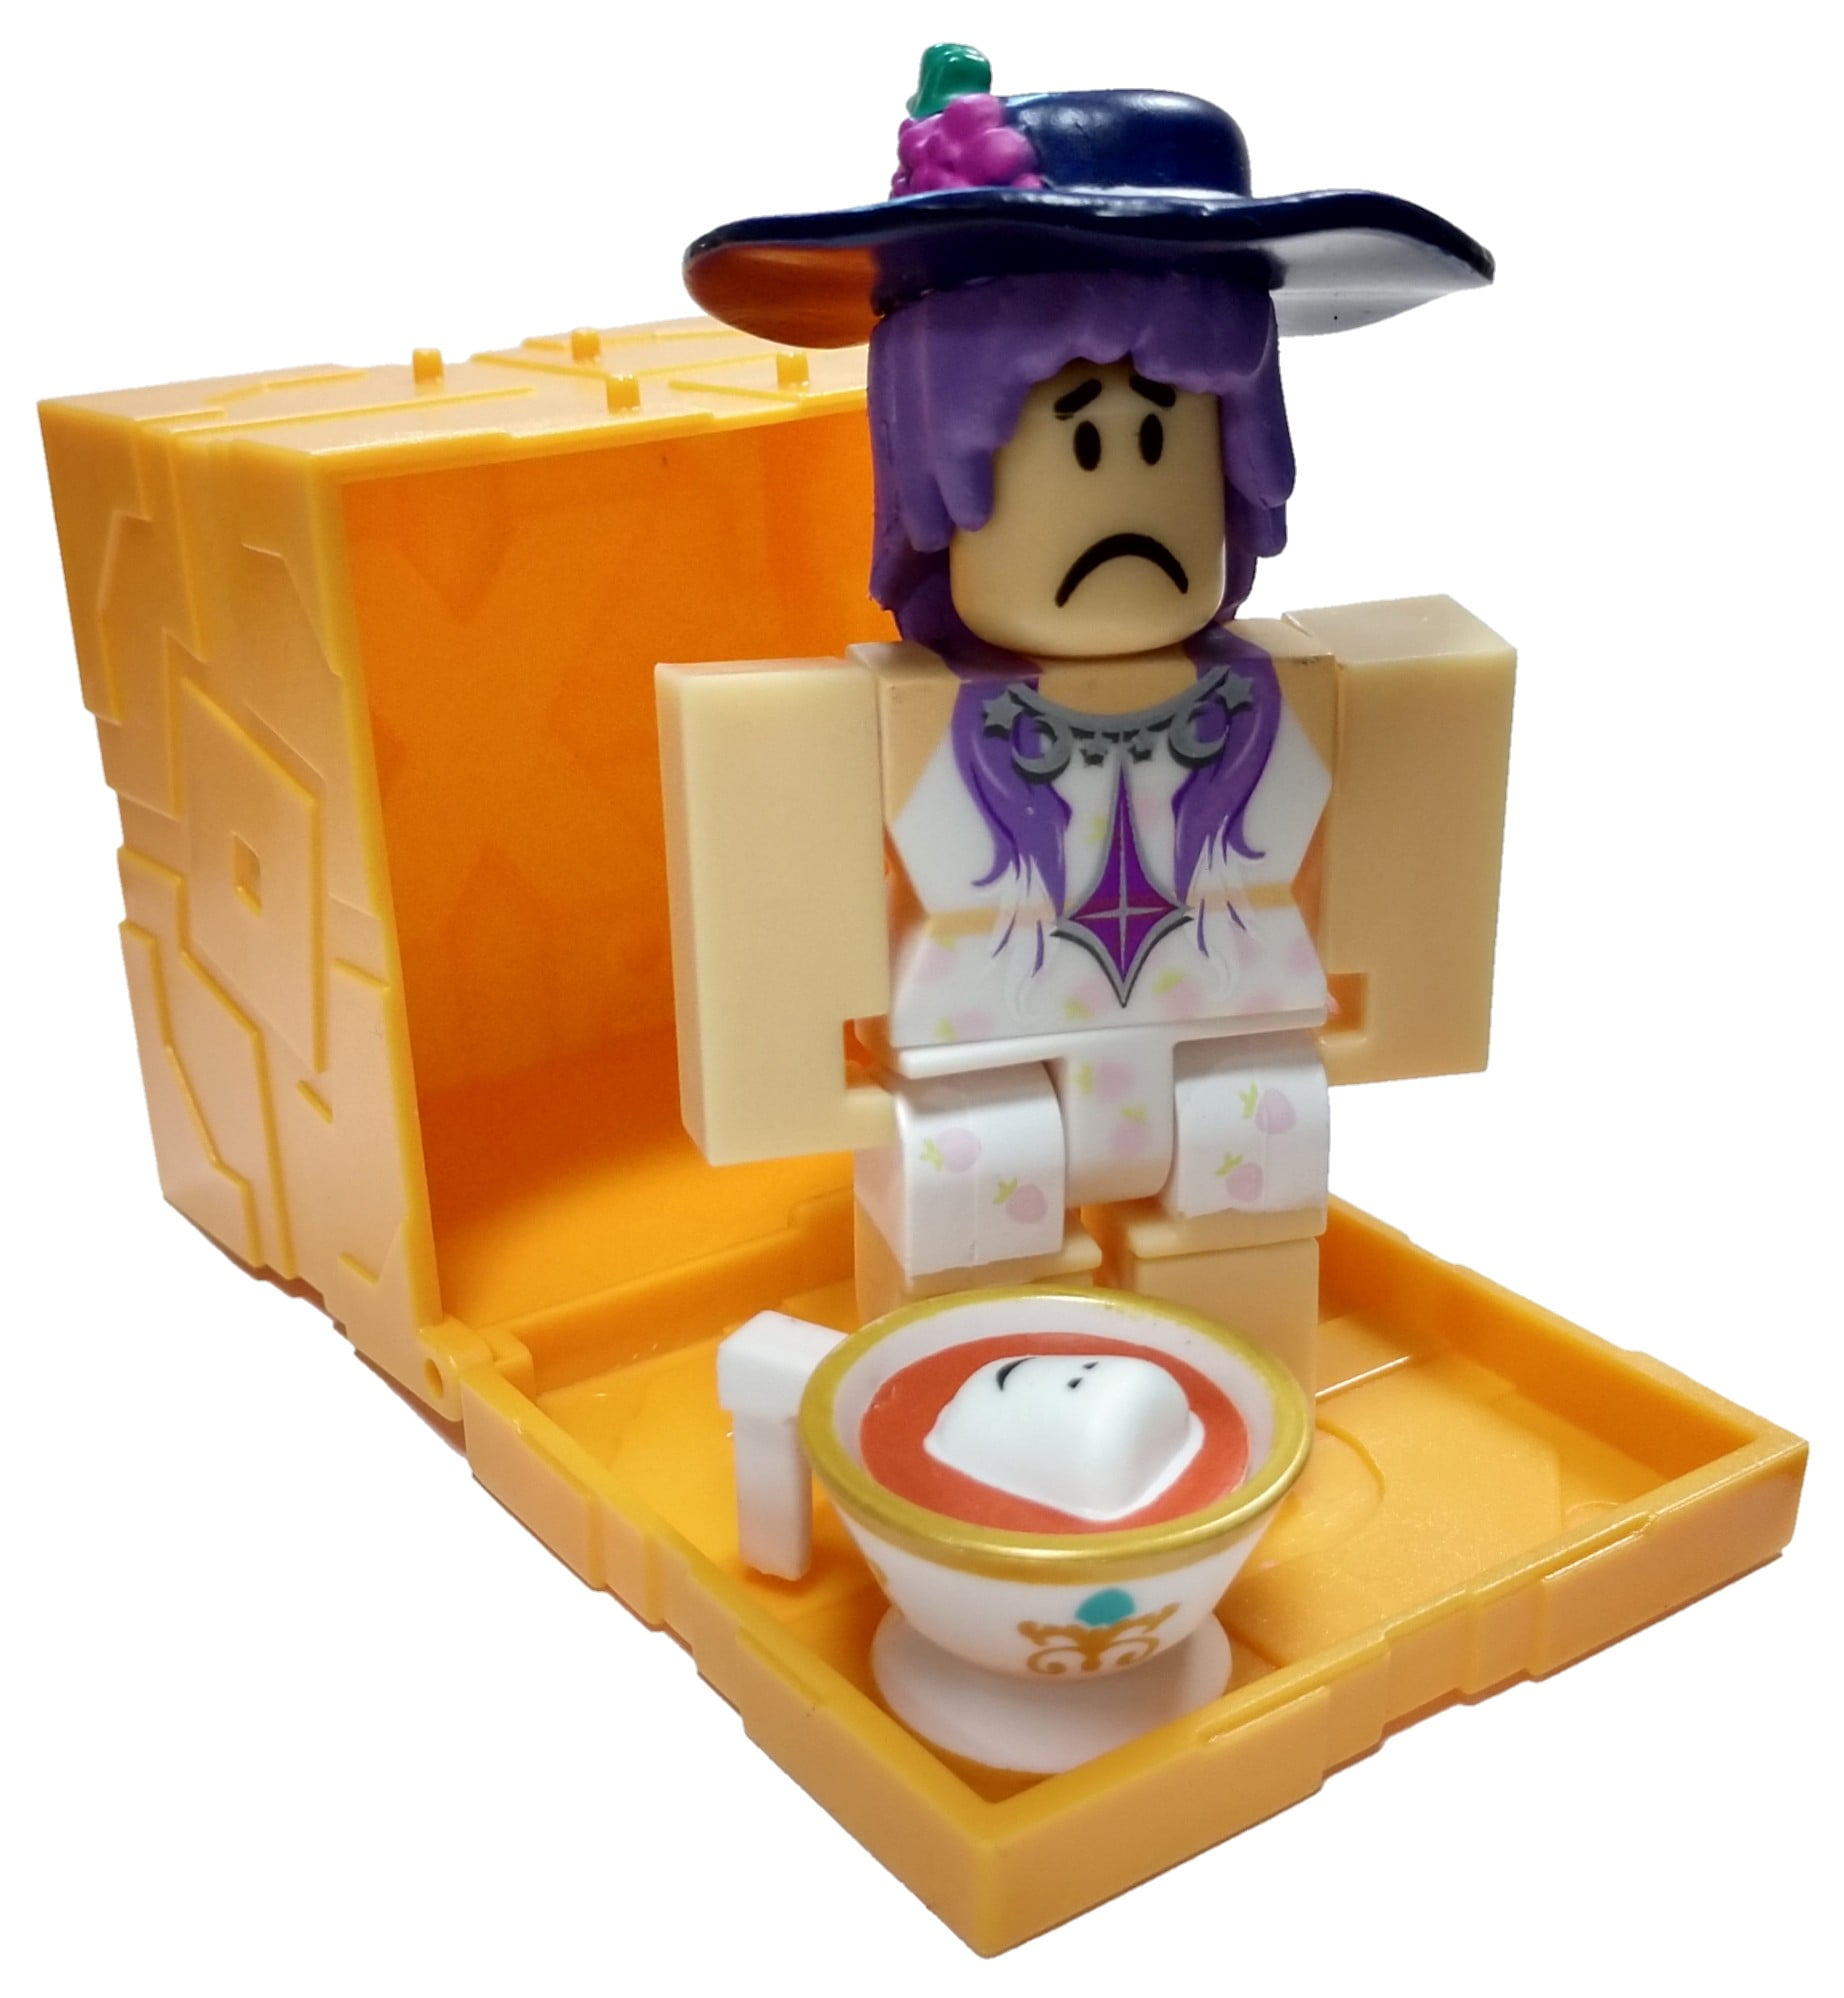 Series 5 Roblox Titanic Socialite Mini Figure With Gold Cube And Online Code No Packaging Walmart Com Walmart Com